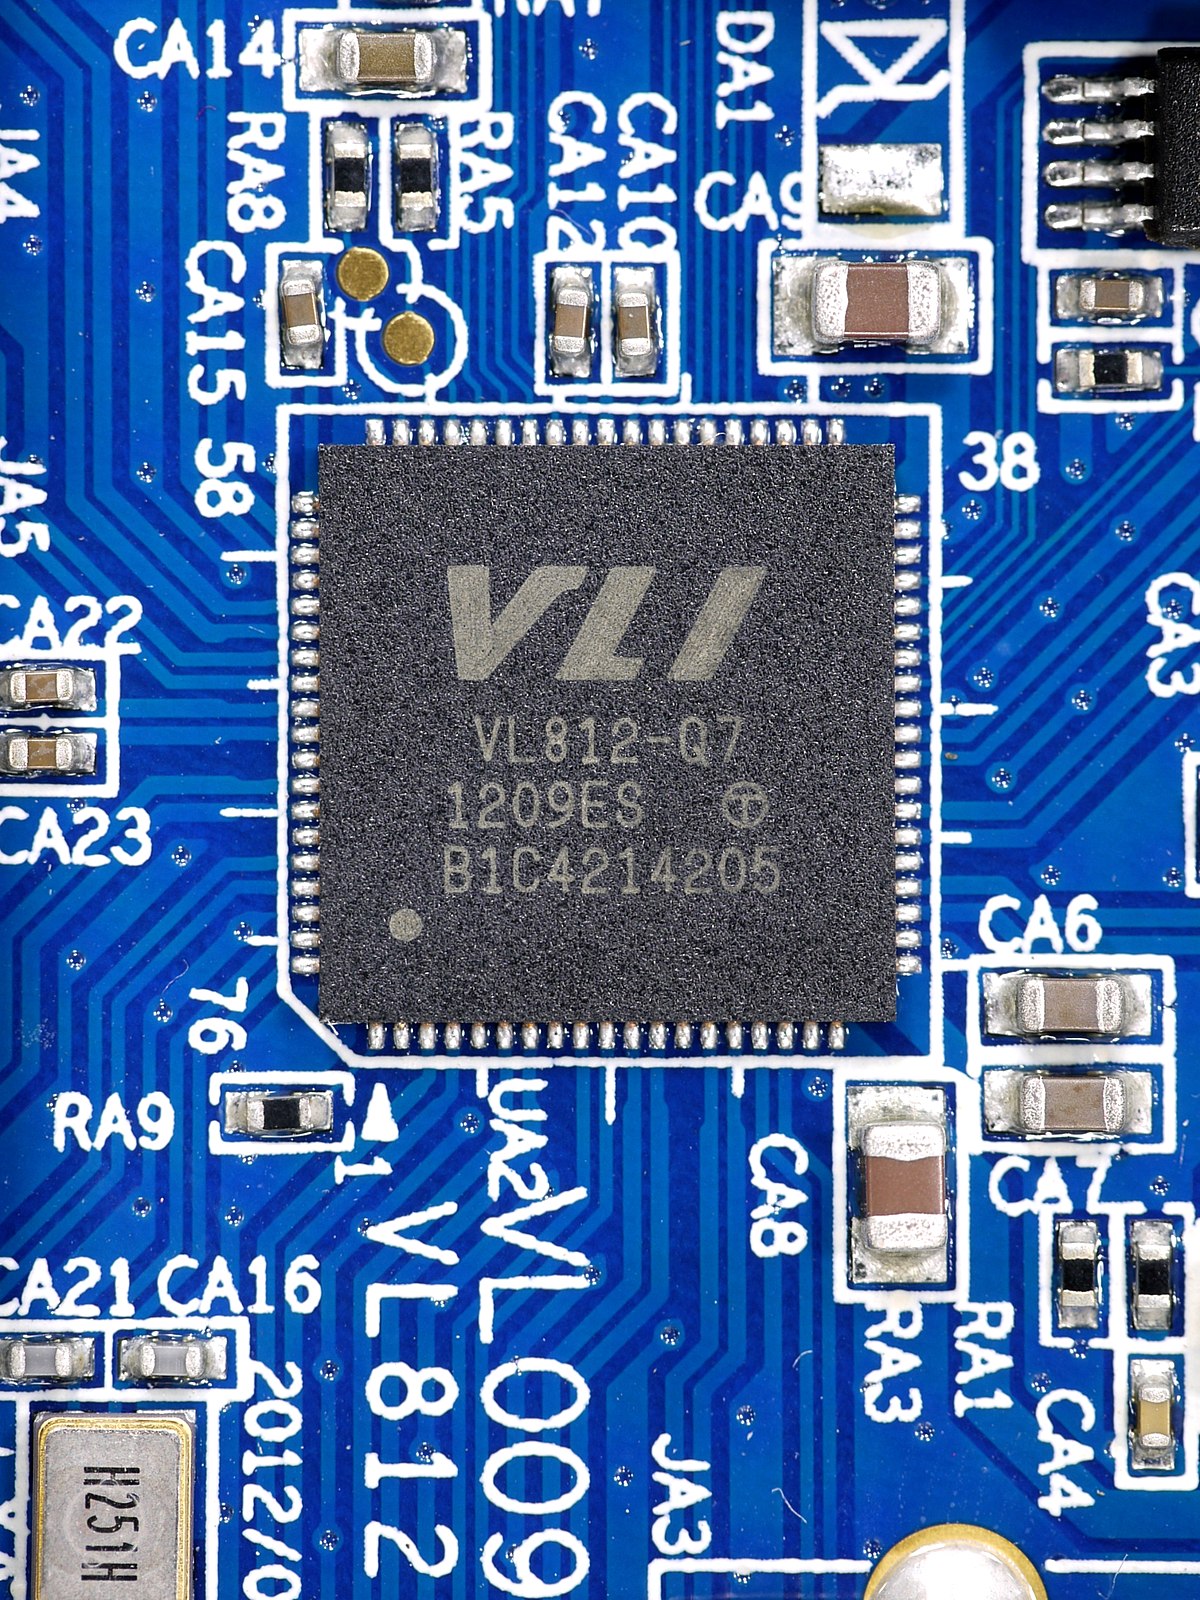 File:VIA VL812 USB 3.0 4-Port Hub Controller Chip on Board.jpg - Wikimedia Commons